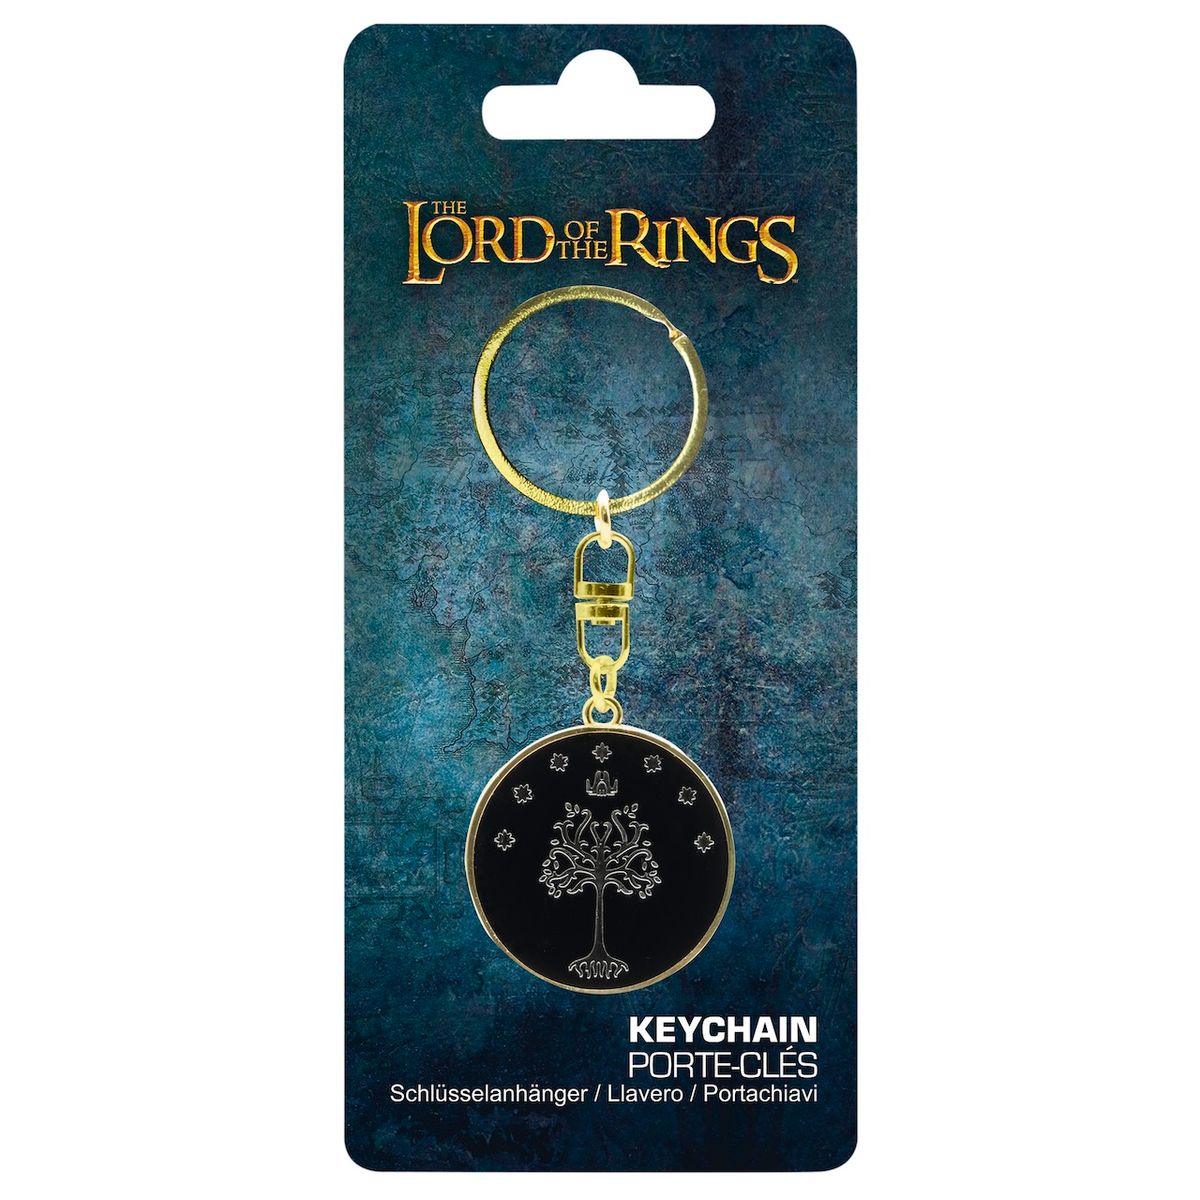 Herr der Ringe - White Tree of Gondor - Schlüsselanhänger